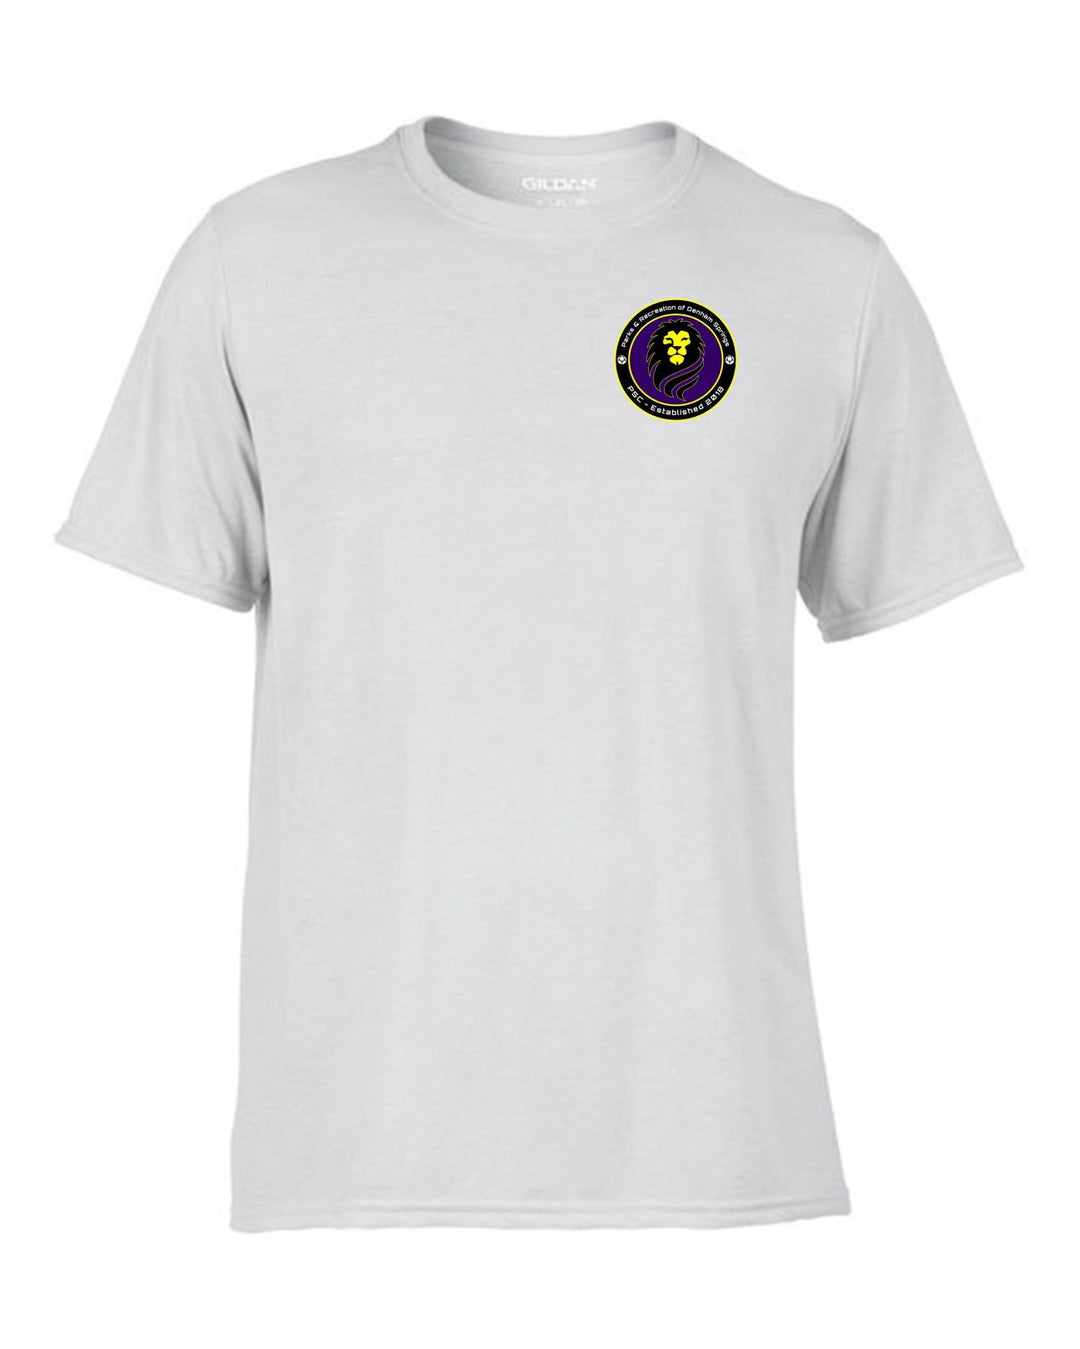 PARDS Short-Sleeve T-Shirt PARDS 2325 White Youth Medium - Third Coast Soccer